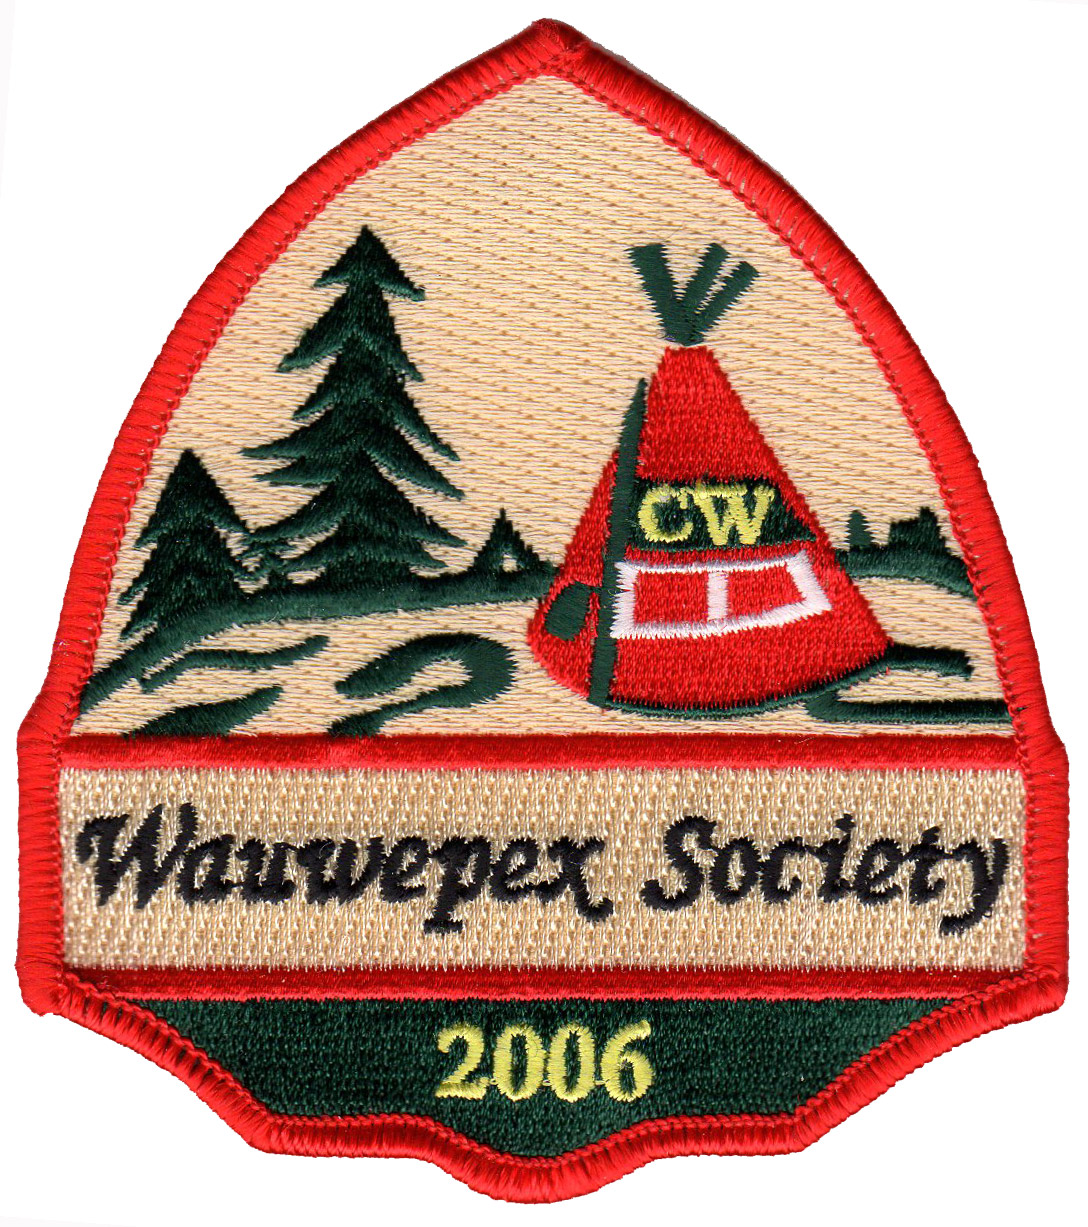 2006 membership patch